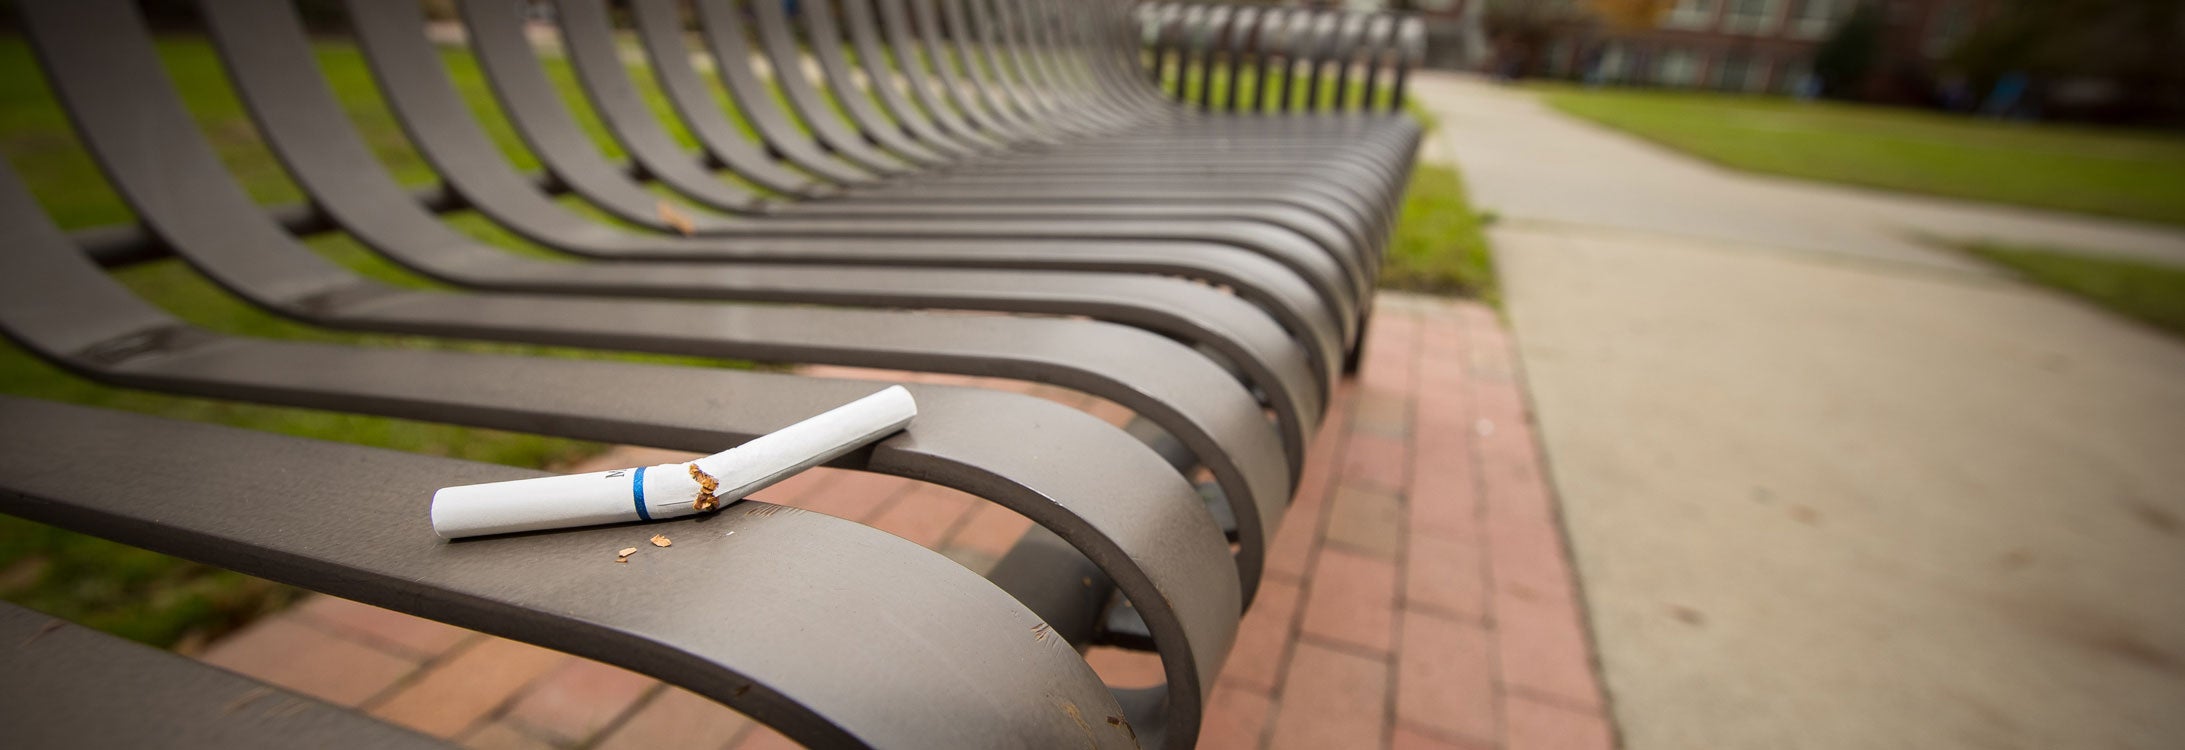 broken cigarette on a campus bench